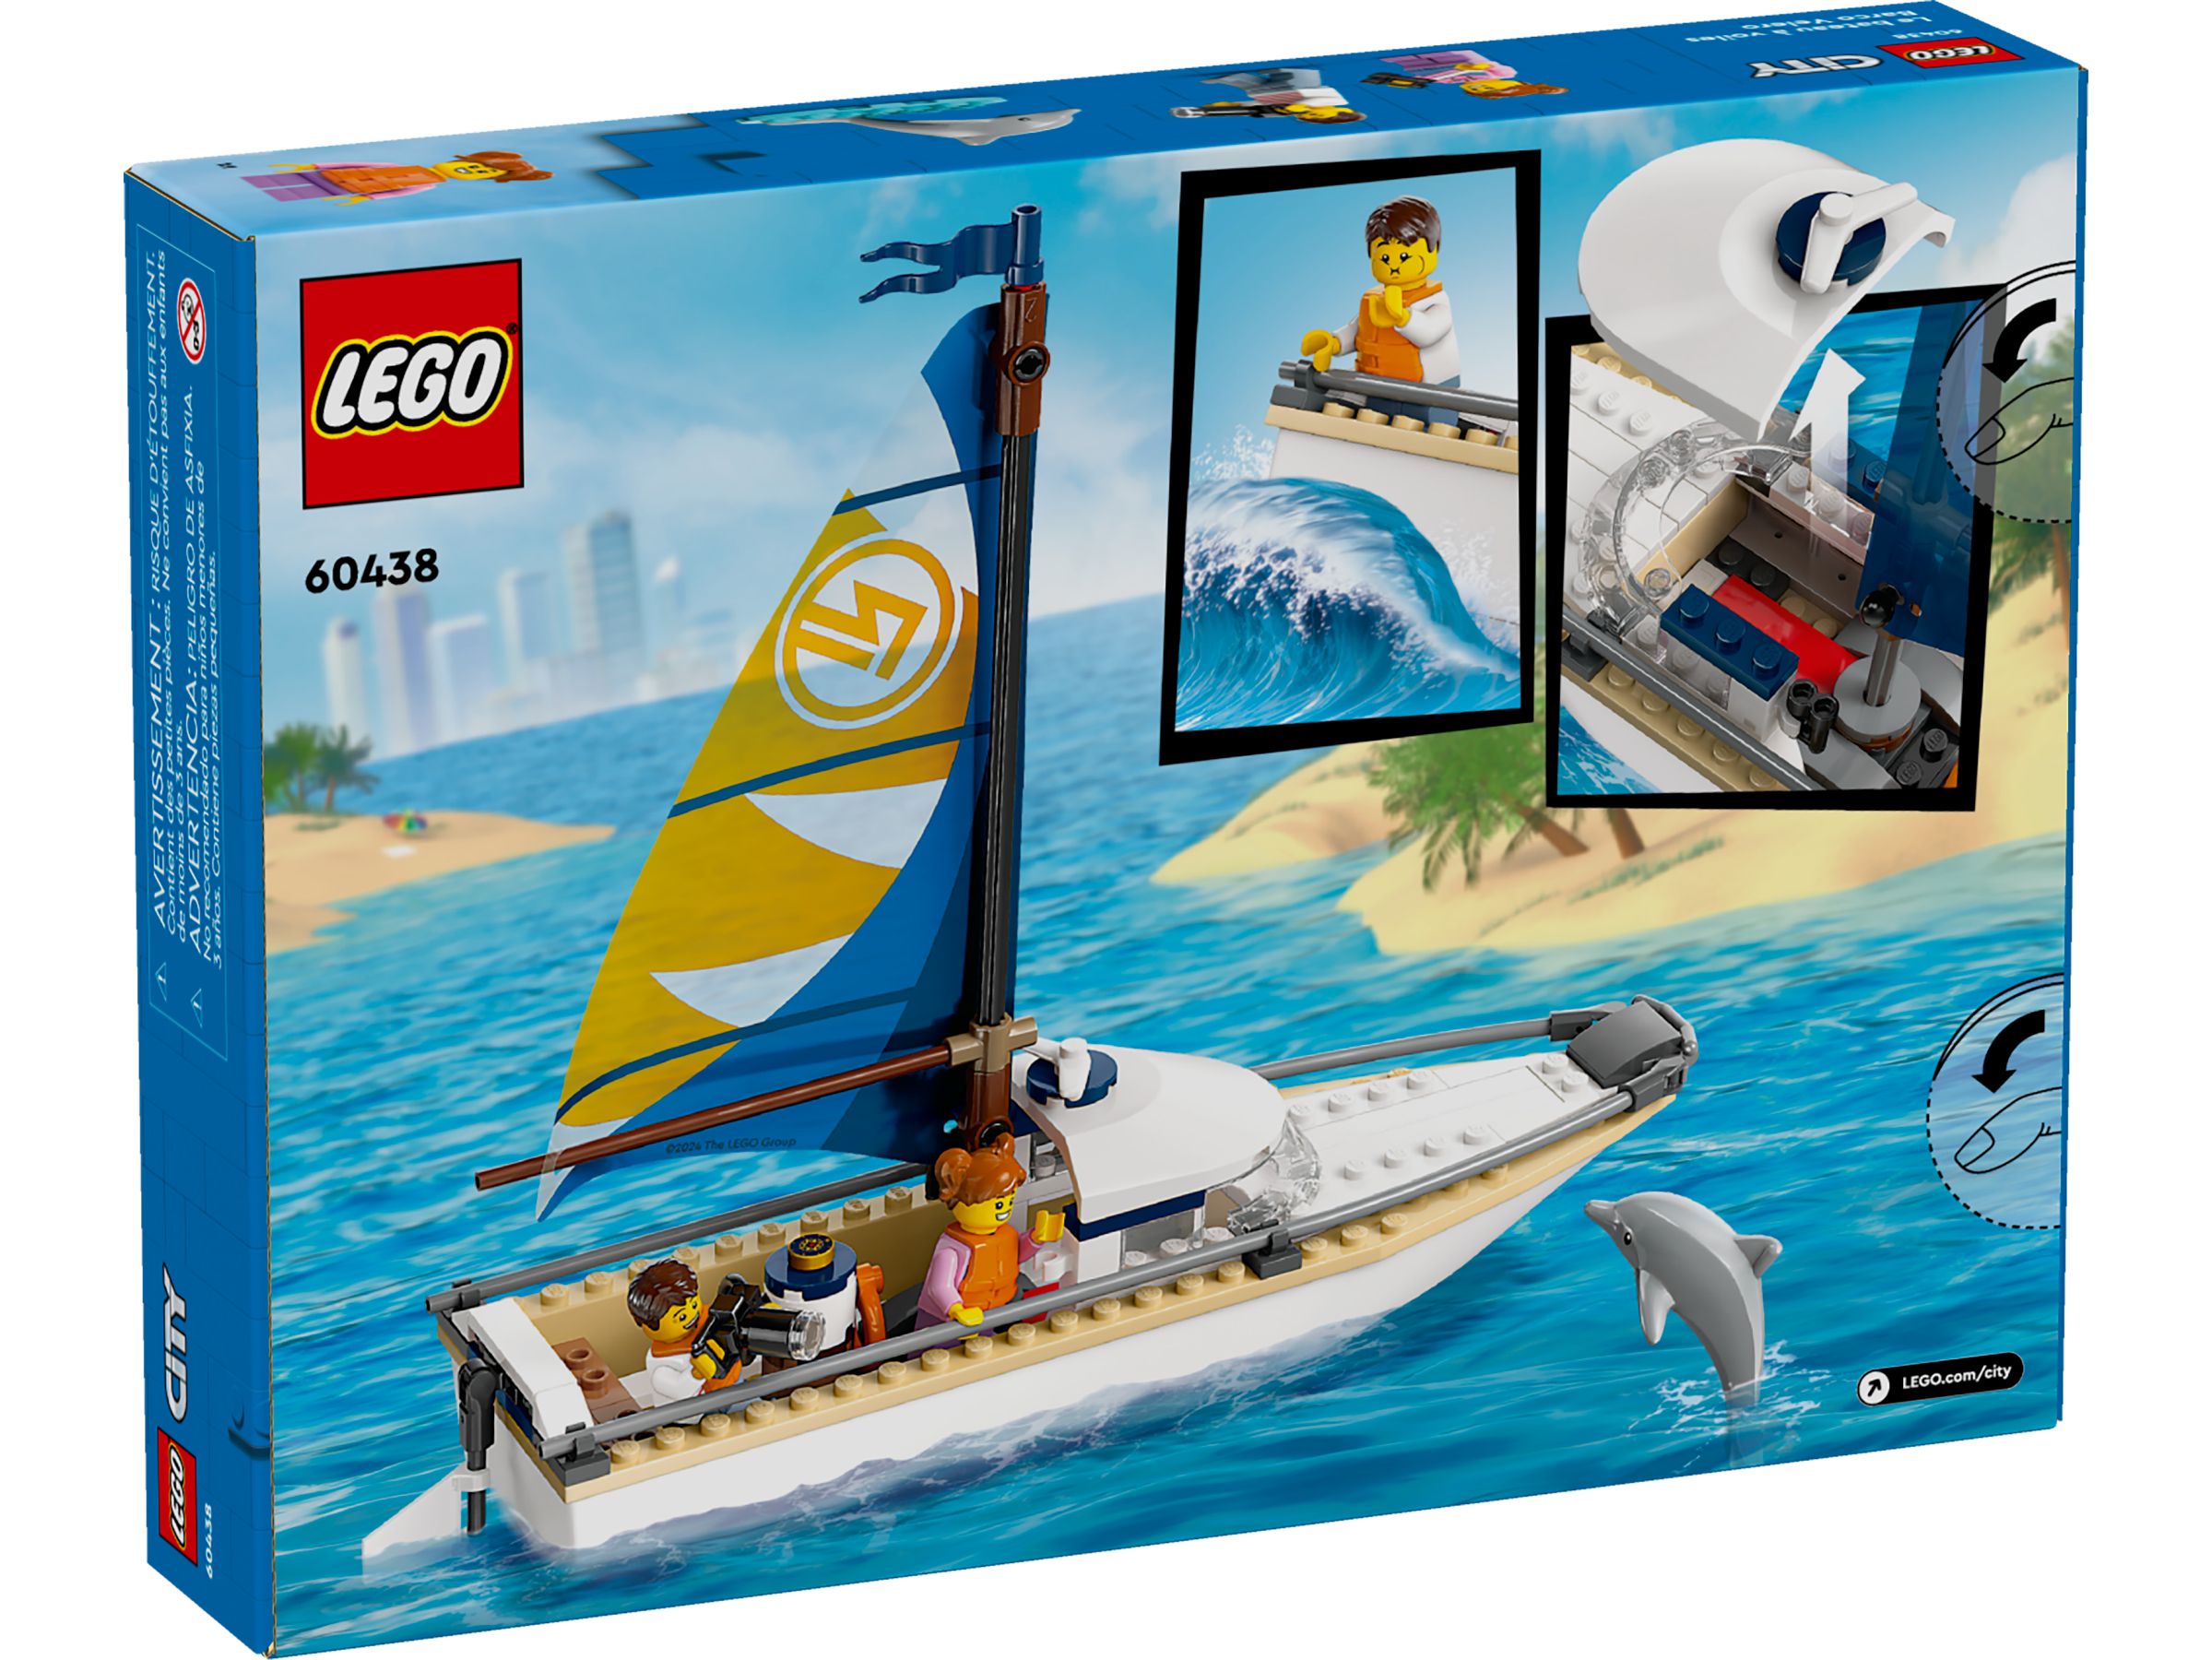 LEGO City 60438 Segelboot LEGO_60438_alt5.jpg